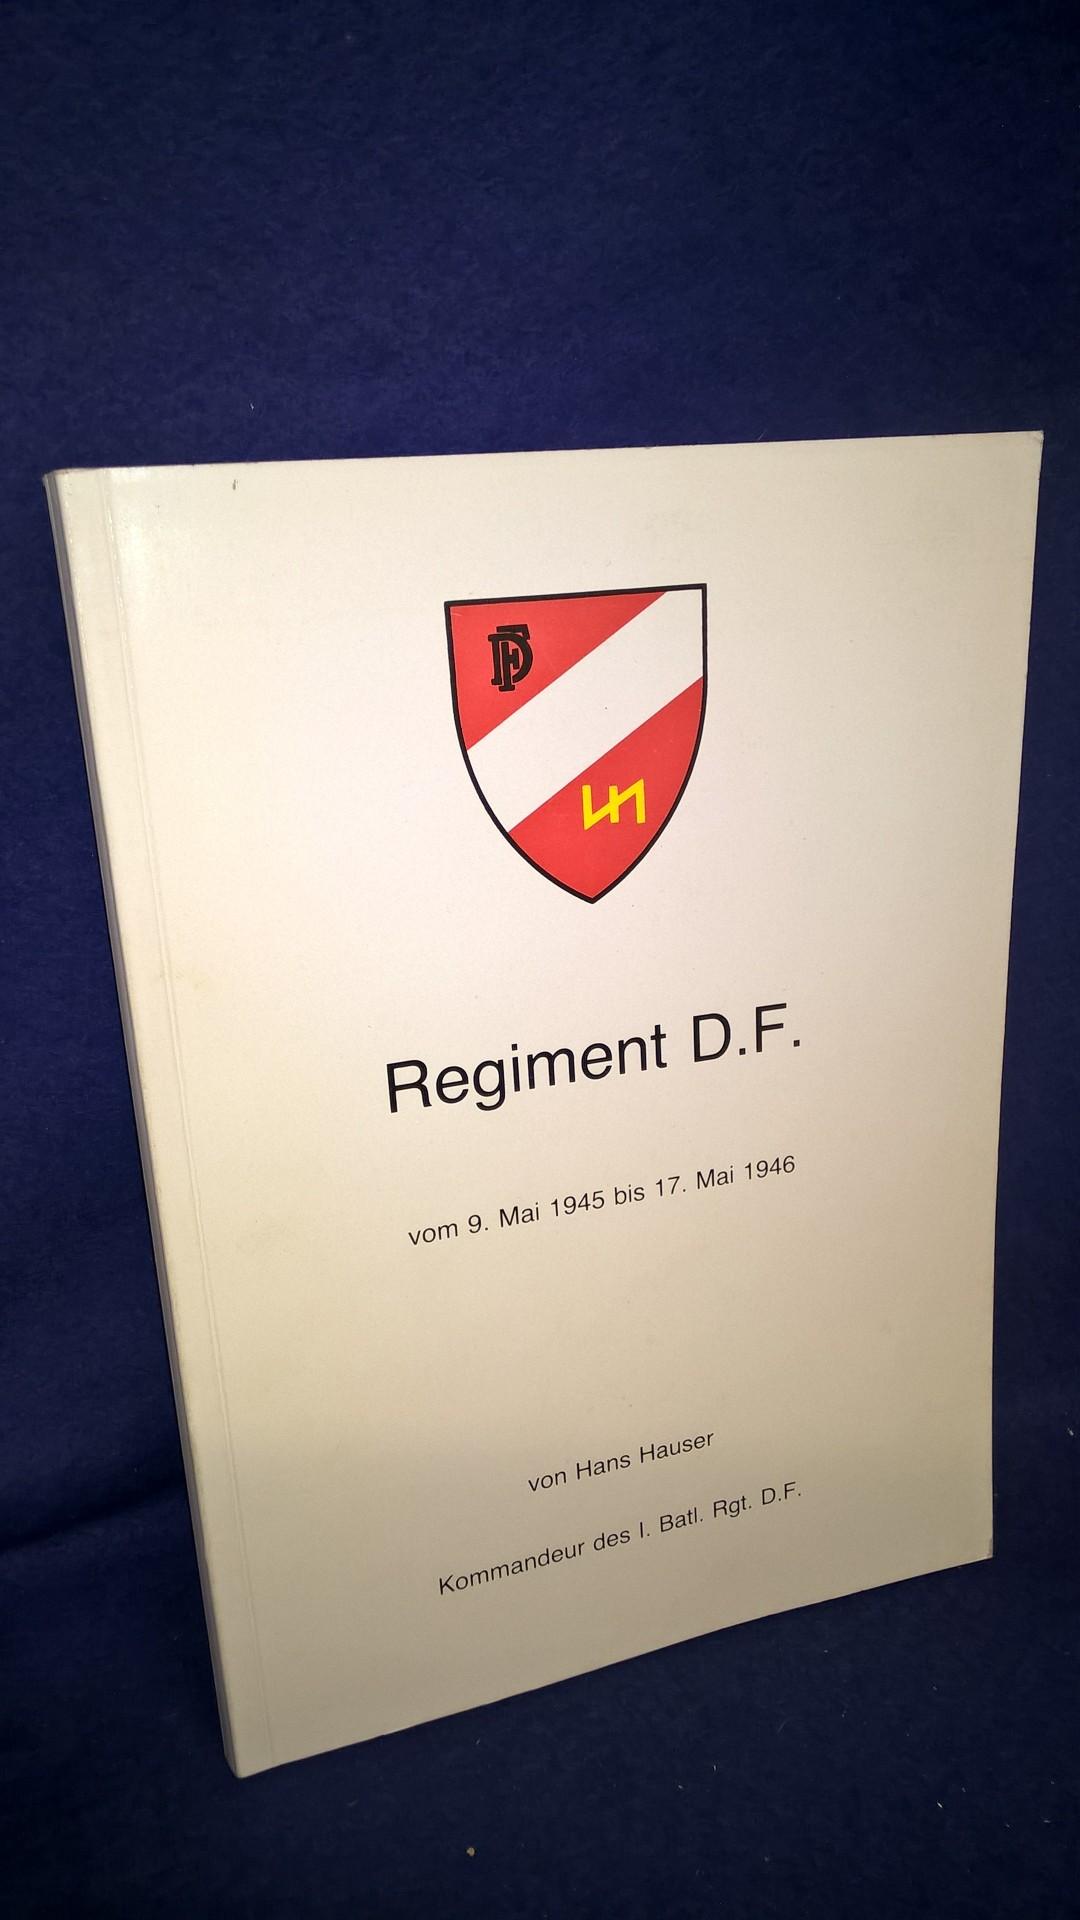 Regiment D.F vom 9. Mai 1945 bis 17. Mai 1946